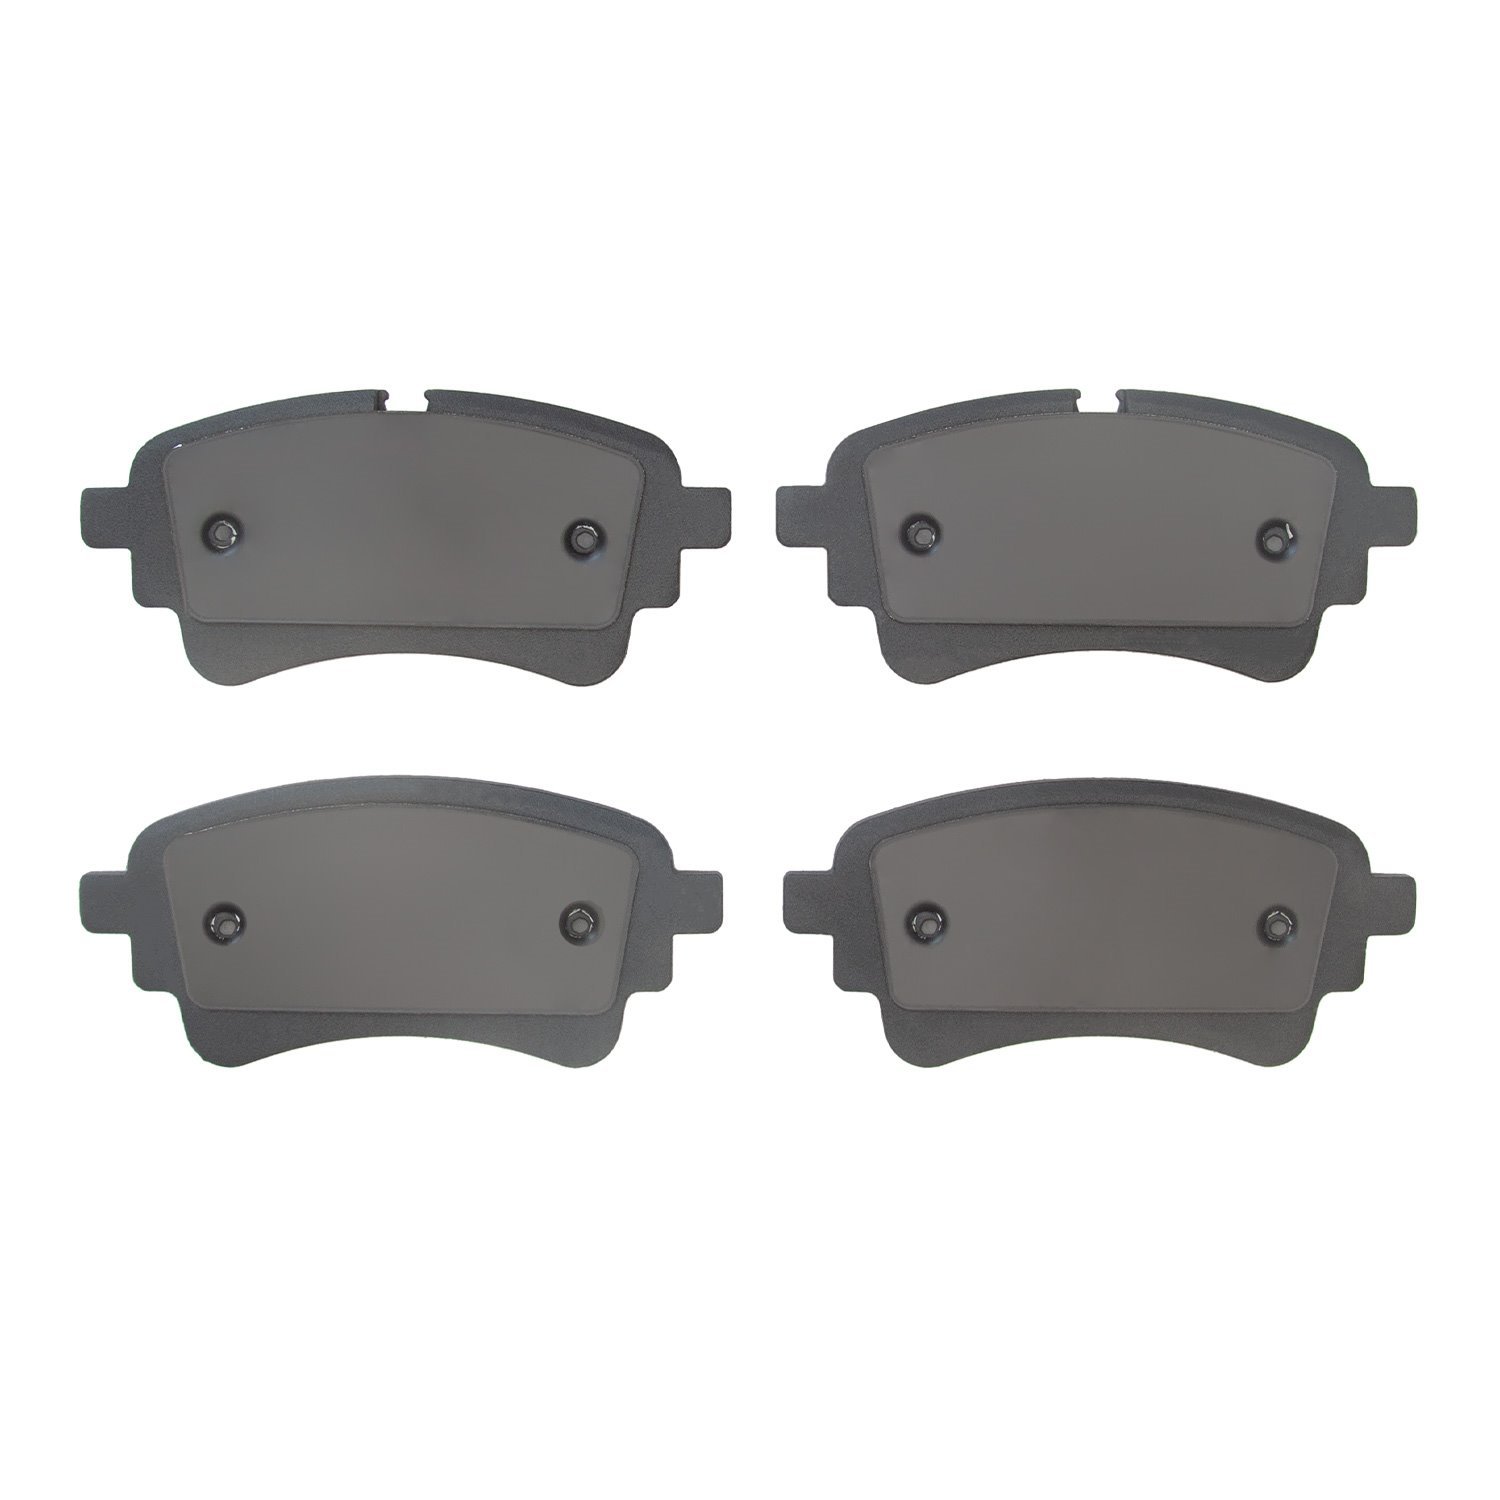 1600-2364-00 5000 Euro Ceramic Brake Pads, Fits Select Audi/Volkswagen, Position: Rear